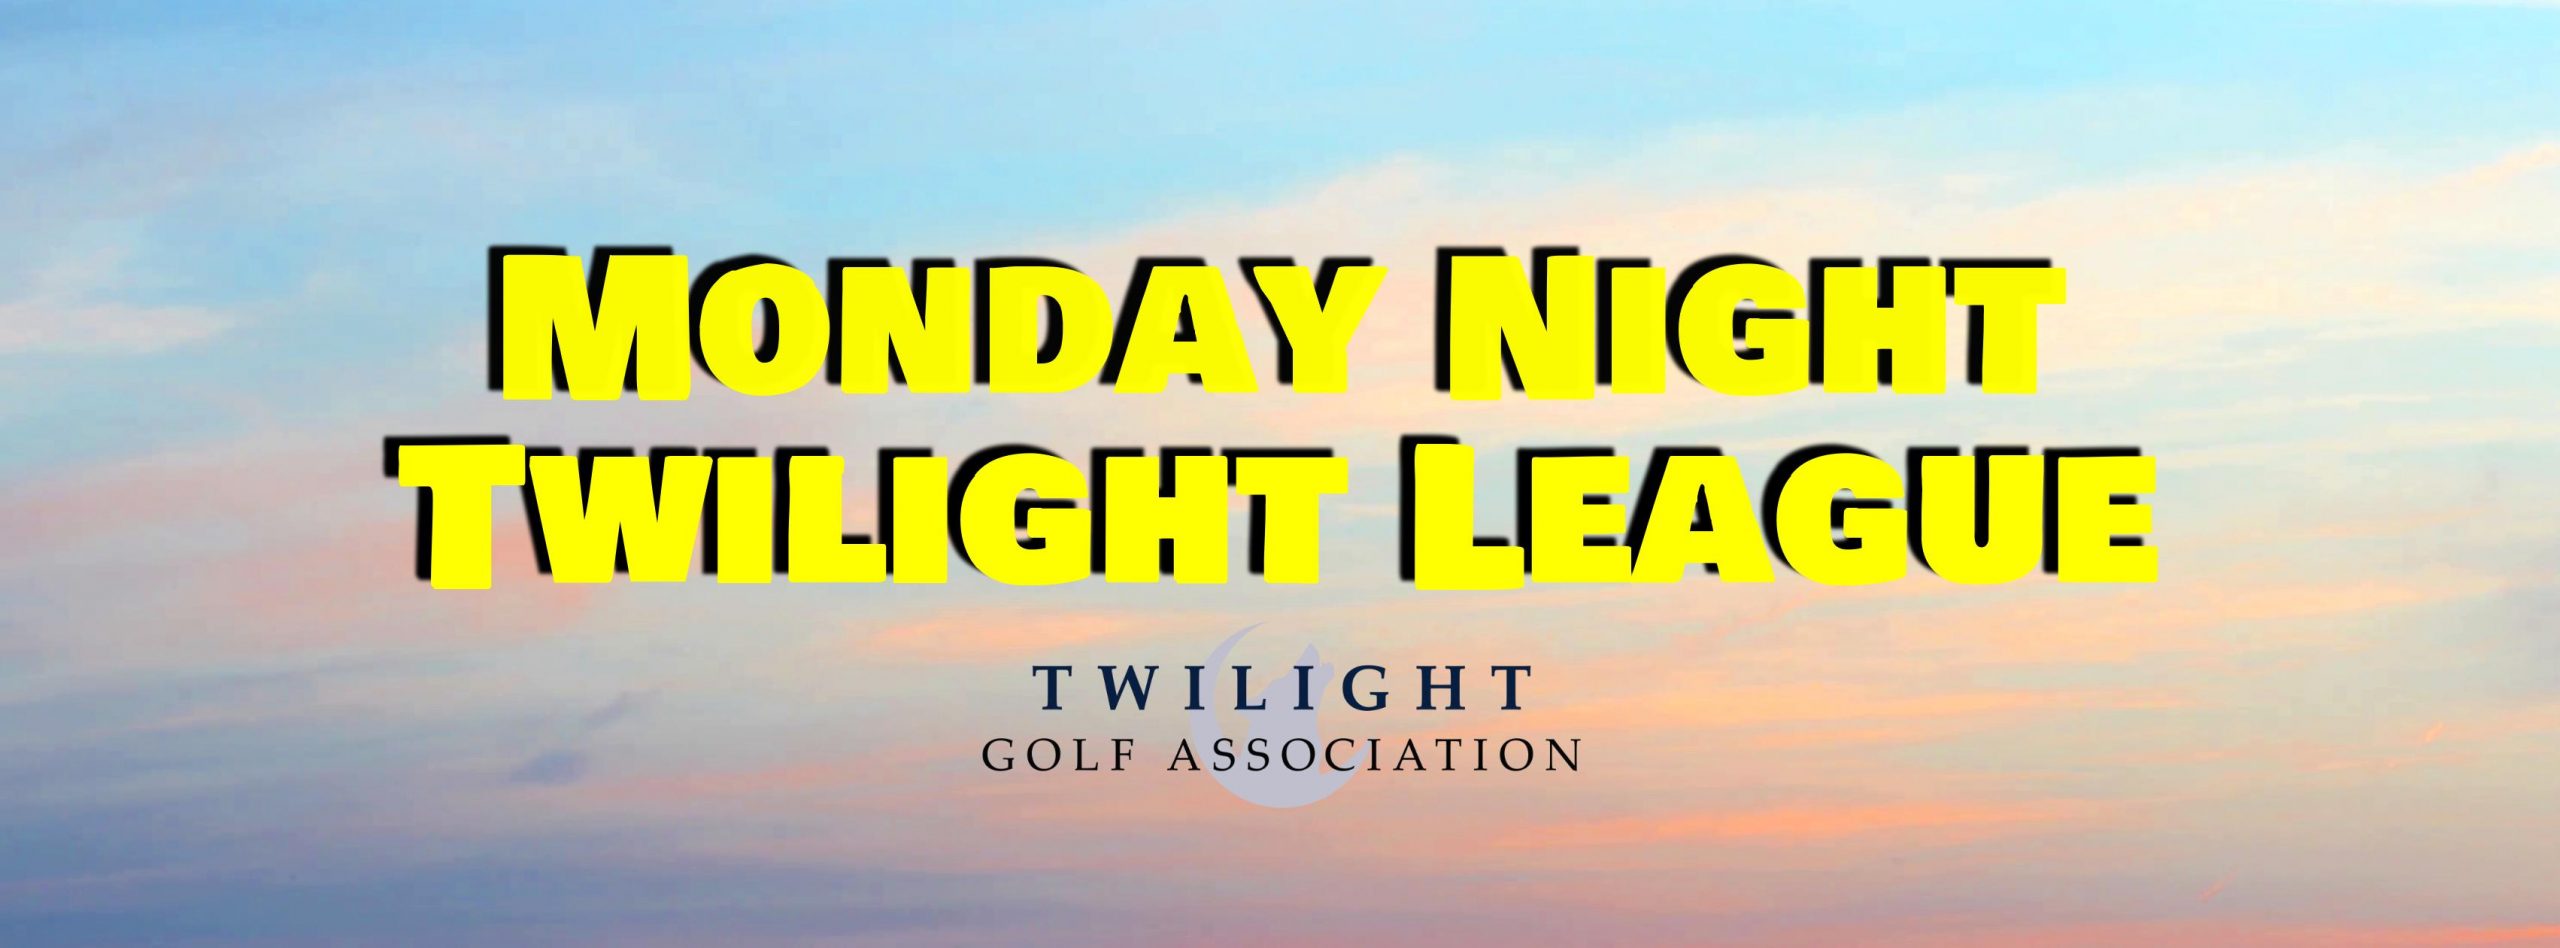 Monday Night Twilight League at Hilliard Lakes Golf Course